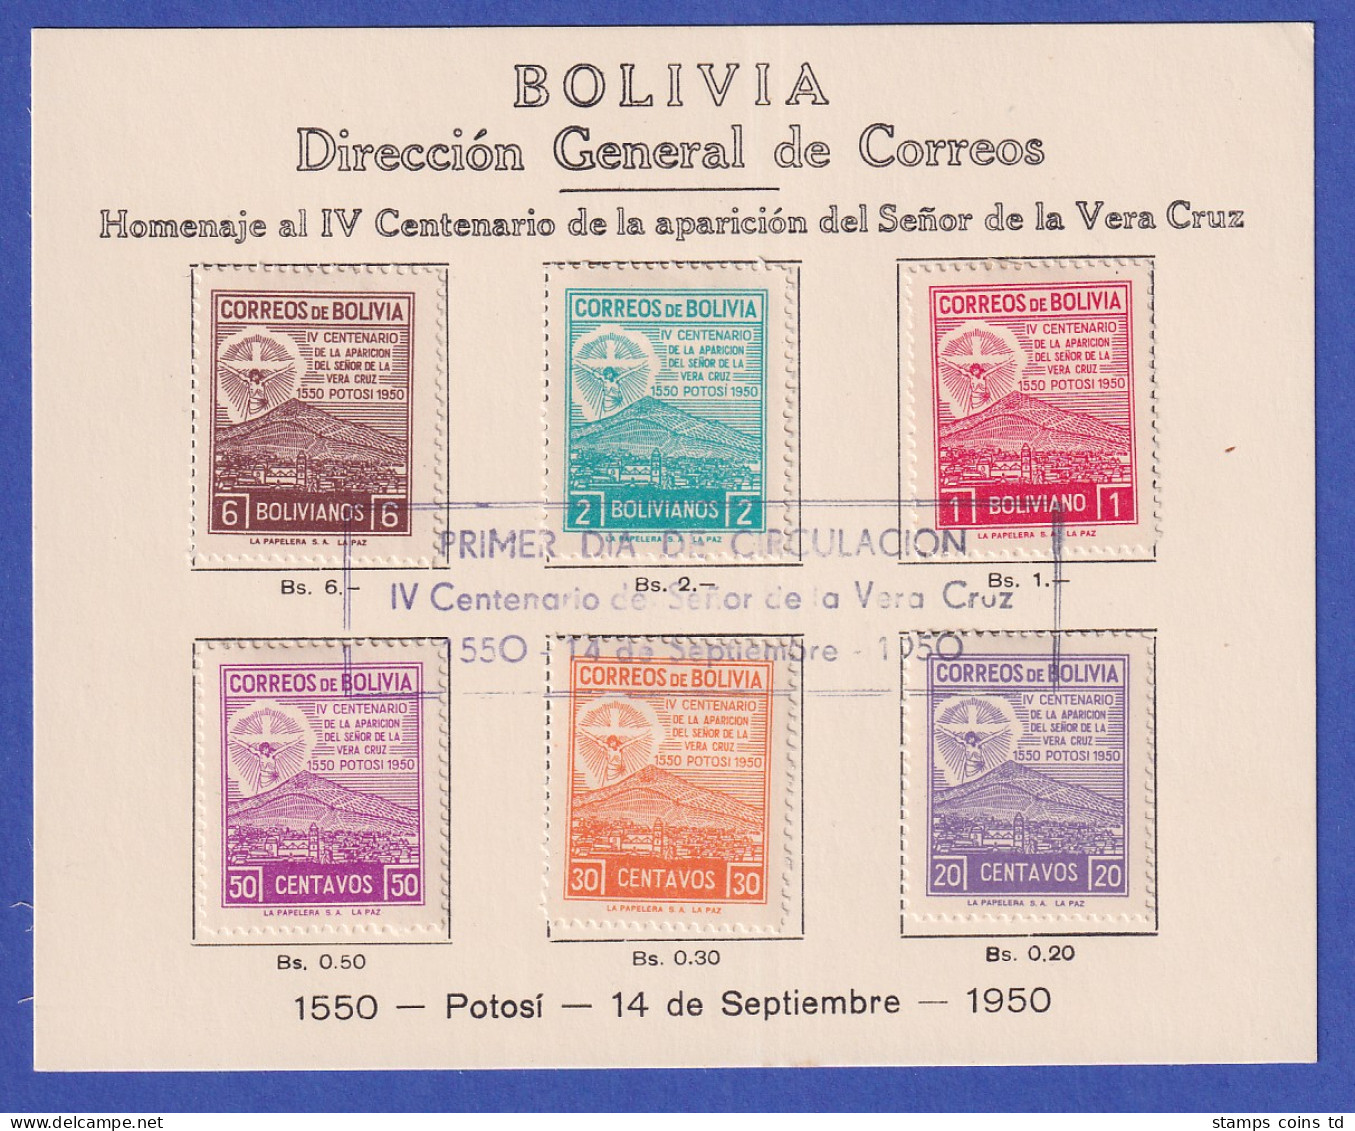 Bolivien 1950 Erscheinung Christi In Potosi 1550  Mi.-Nr. 437-42 Auf FDC-Karte  - Bolivia